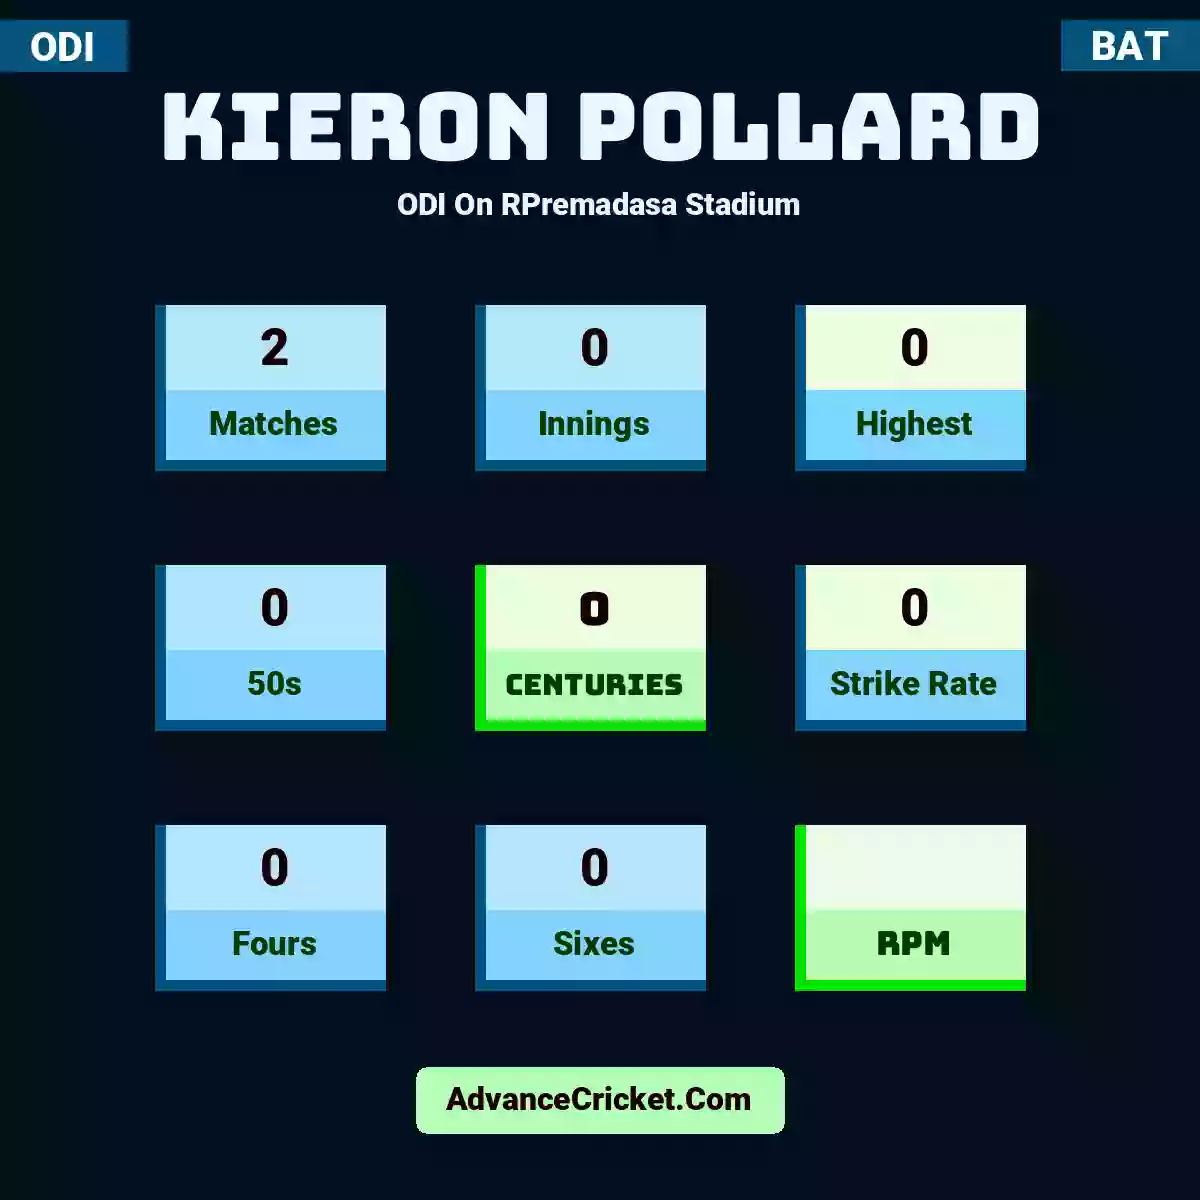 Kieron Pollard ODI  On RPremadasa Stadium, Kieron Pollard played 2 matches, scored 0 runs as highest, 0 half-centuries, and 0 centuries, with a strike rate of 0. K.Pollard hit 0 fours and 0 sixes.